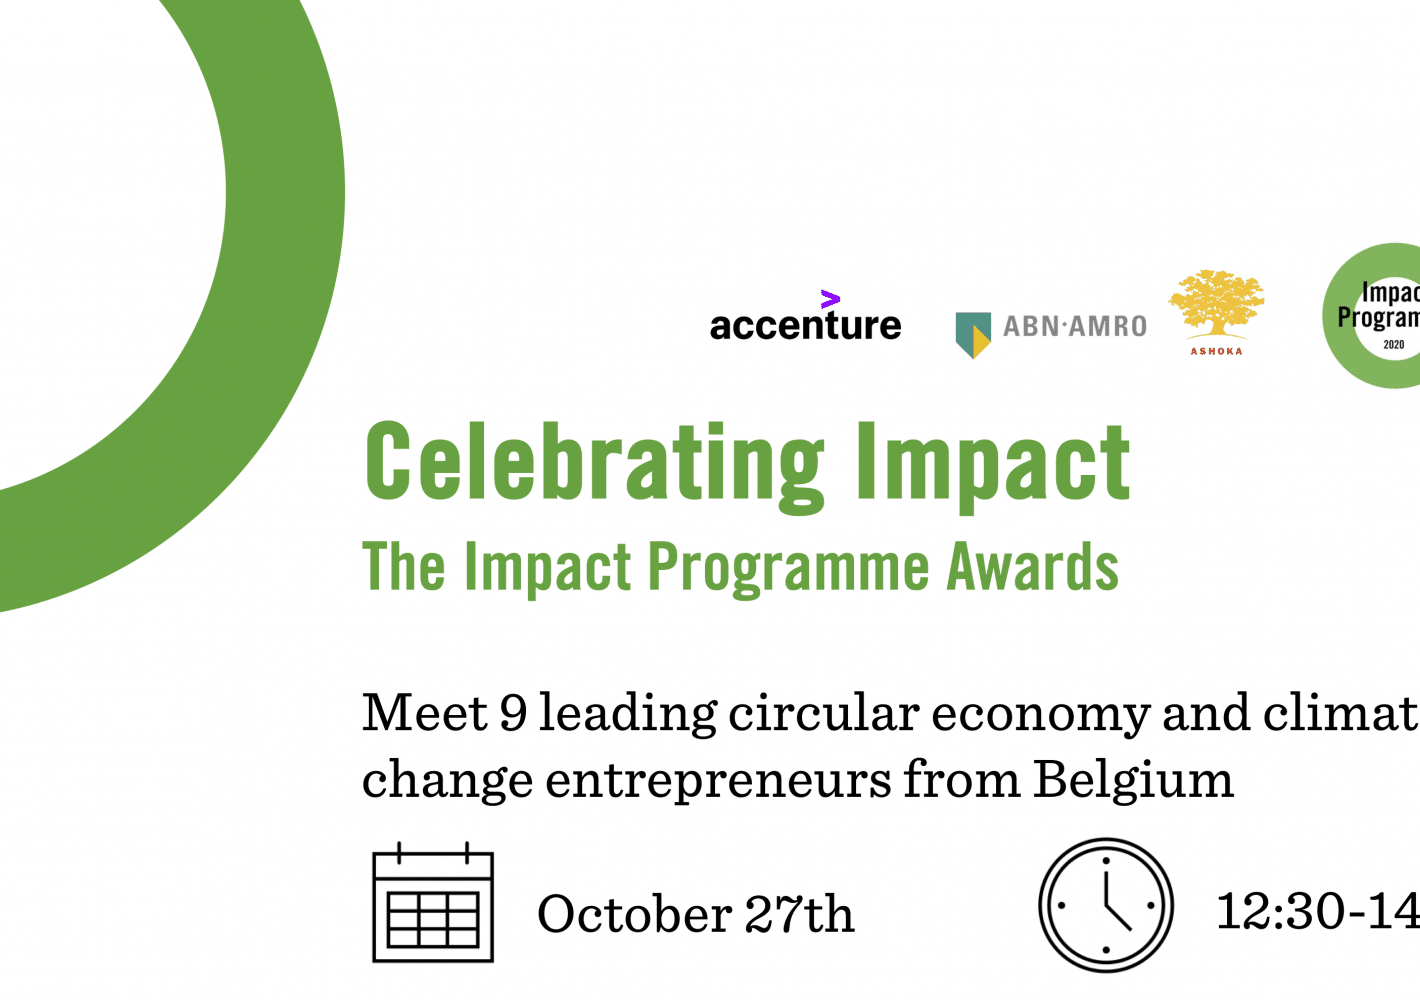 Impact Programme Awards